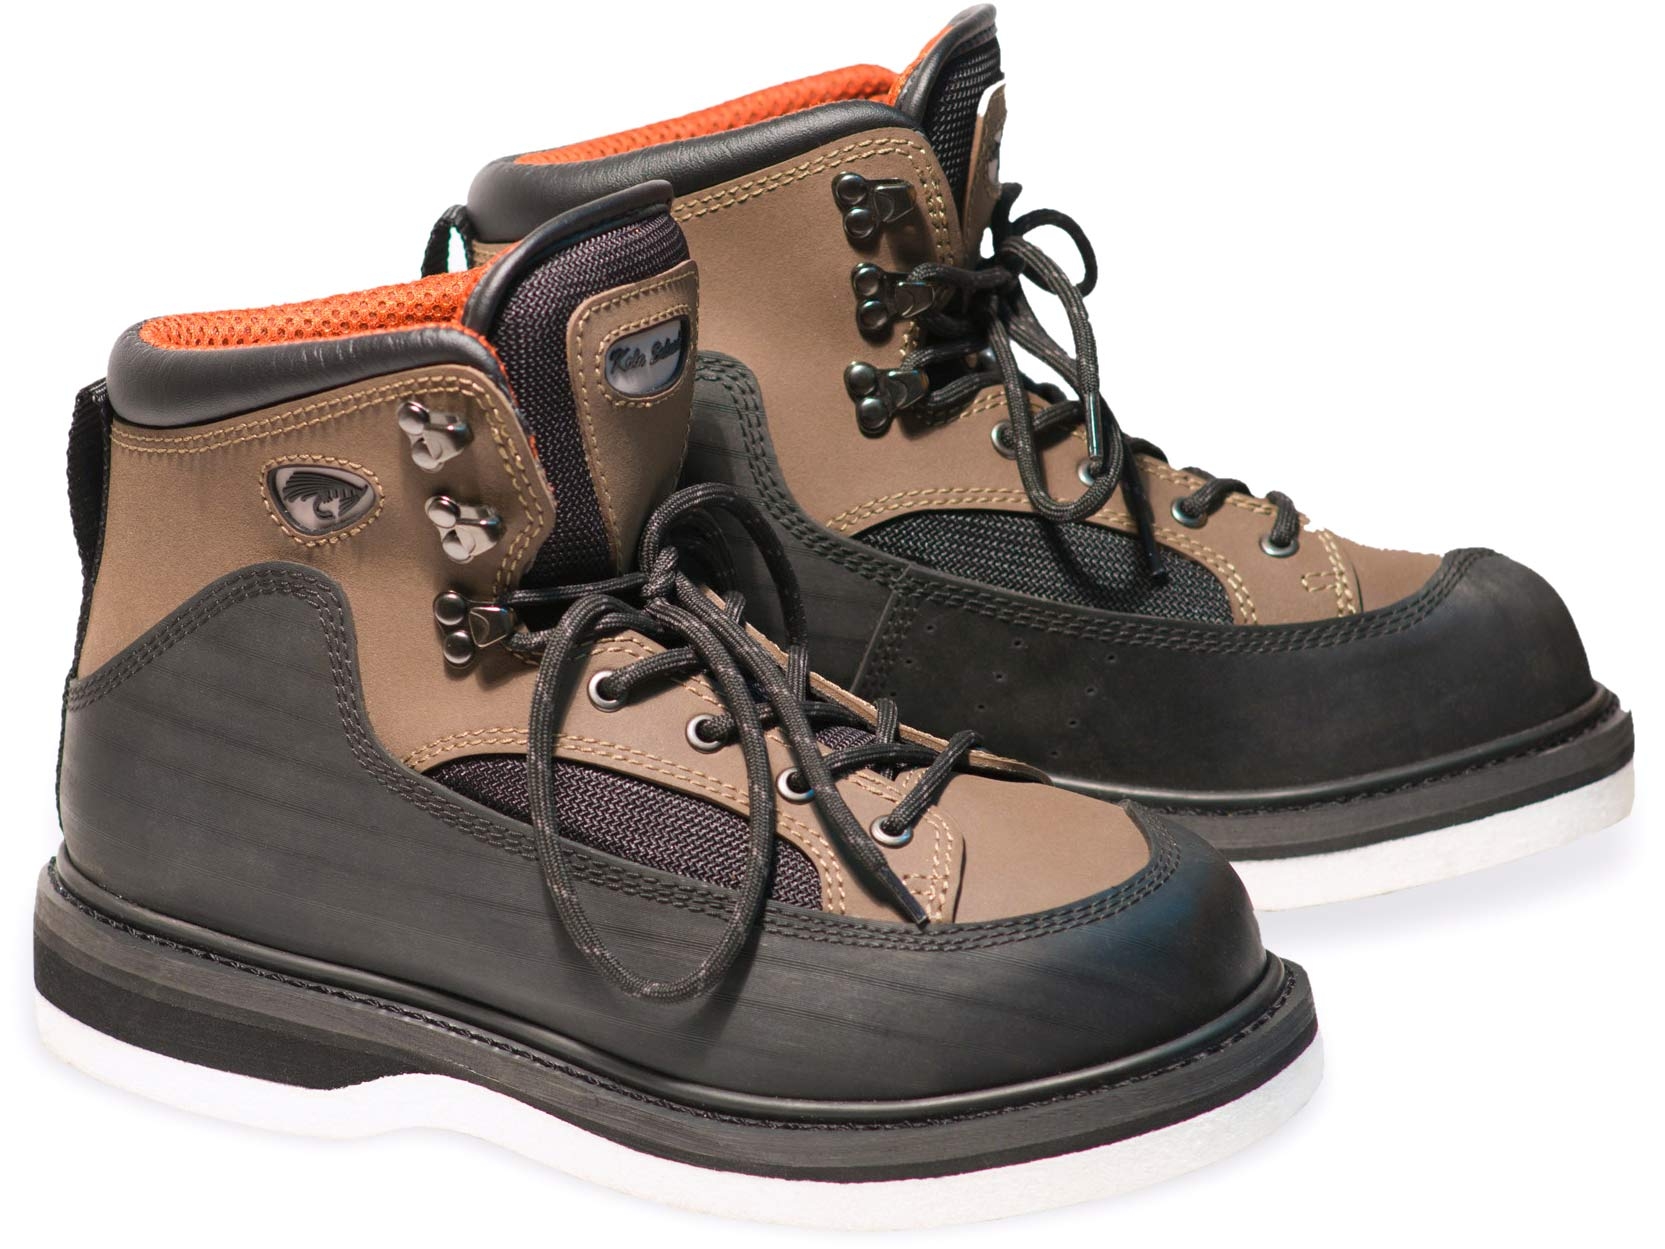 Забродные ботинки KOLA SALMON Guide Style R3 Wading Boots